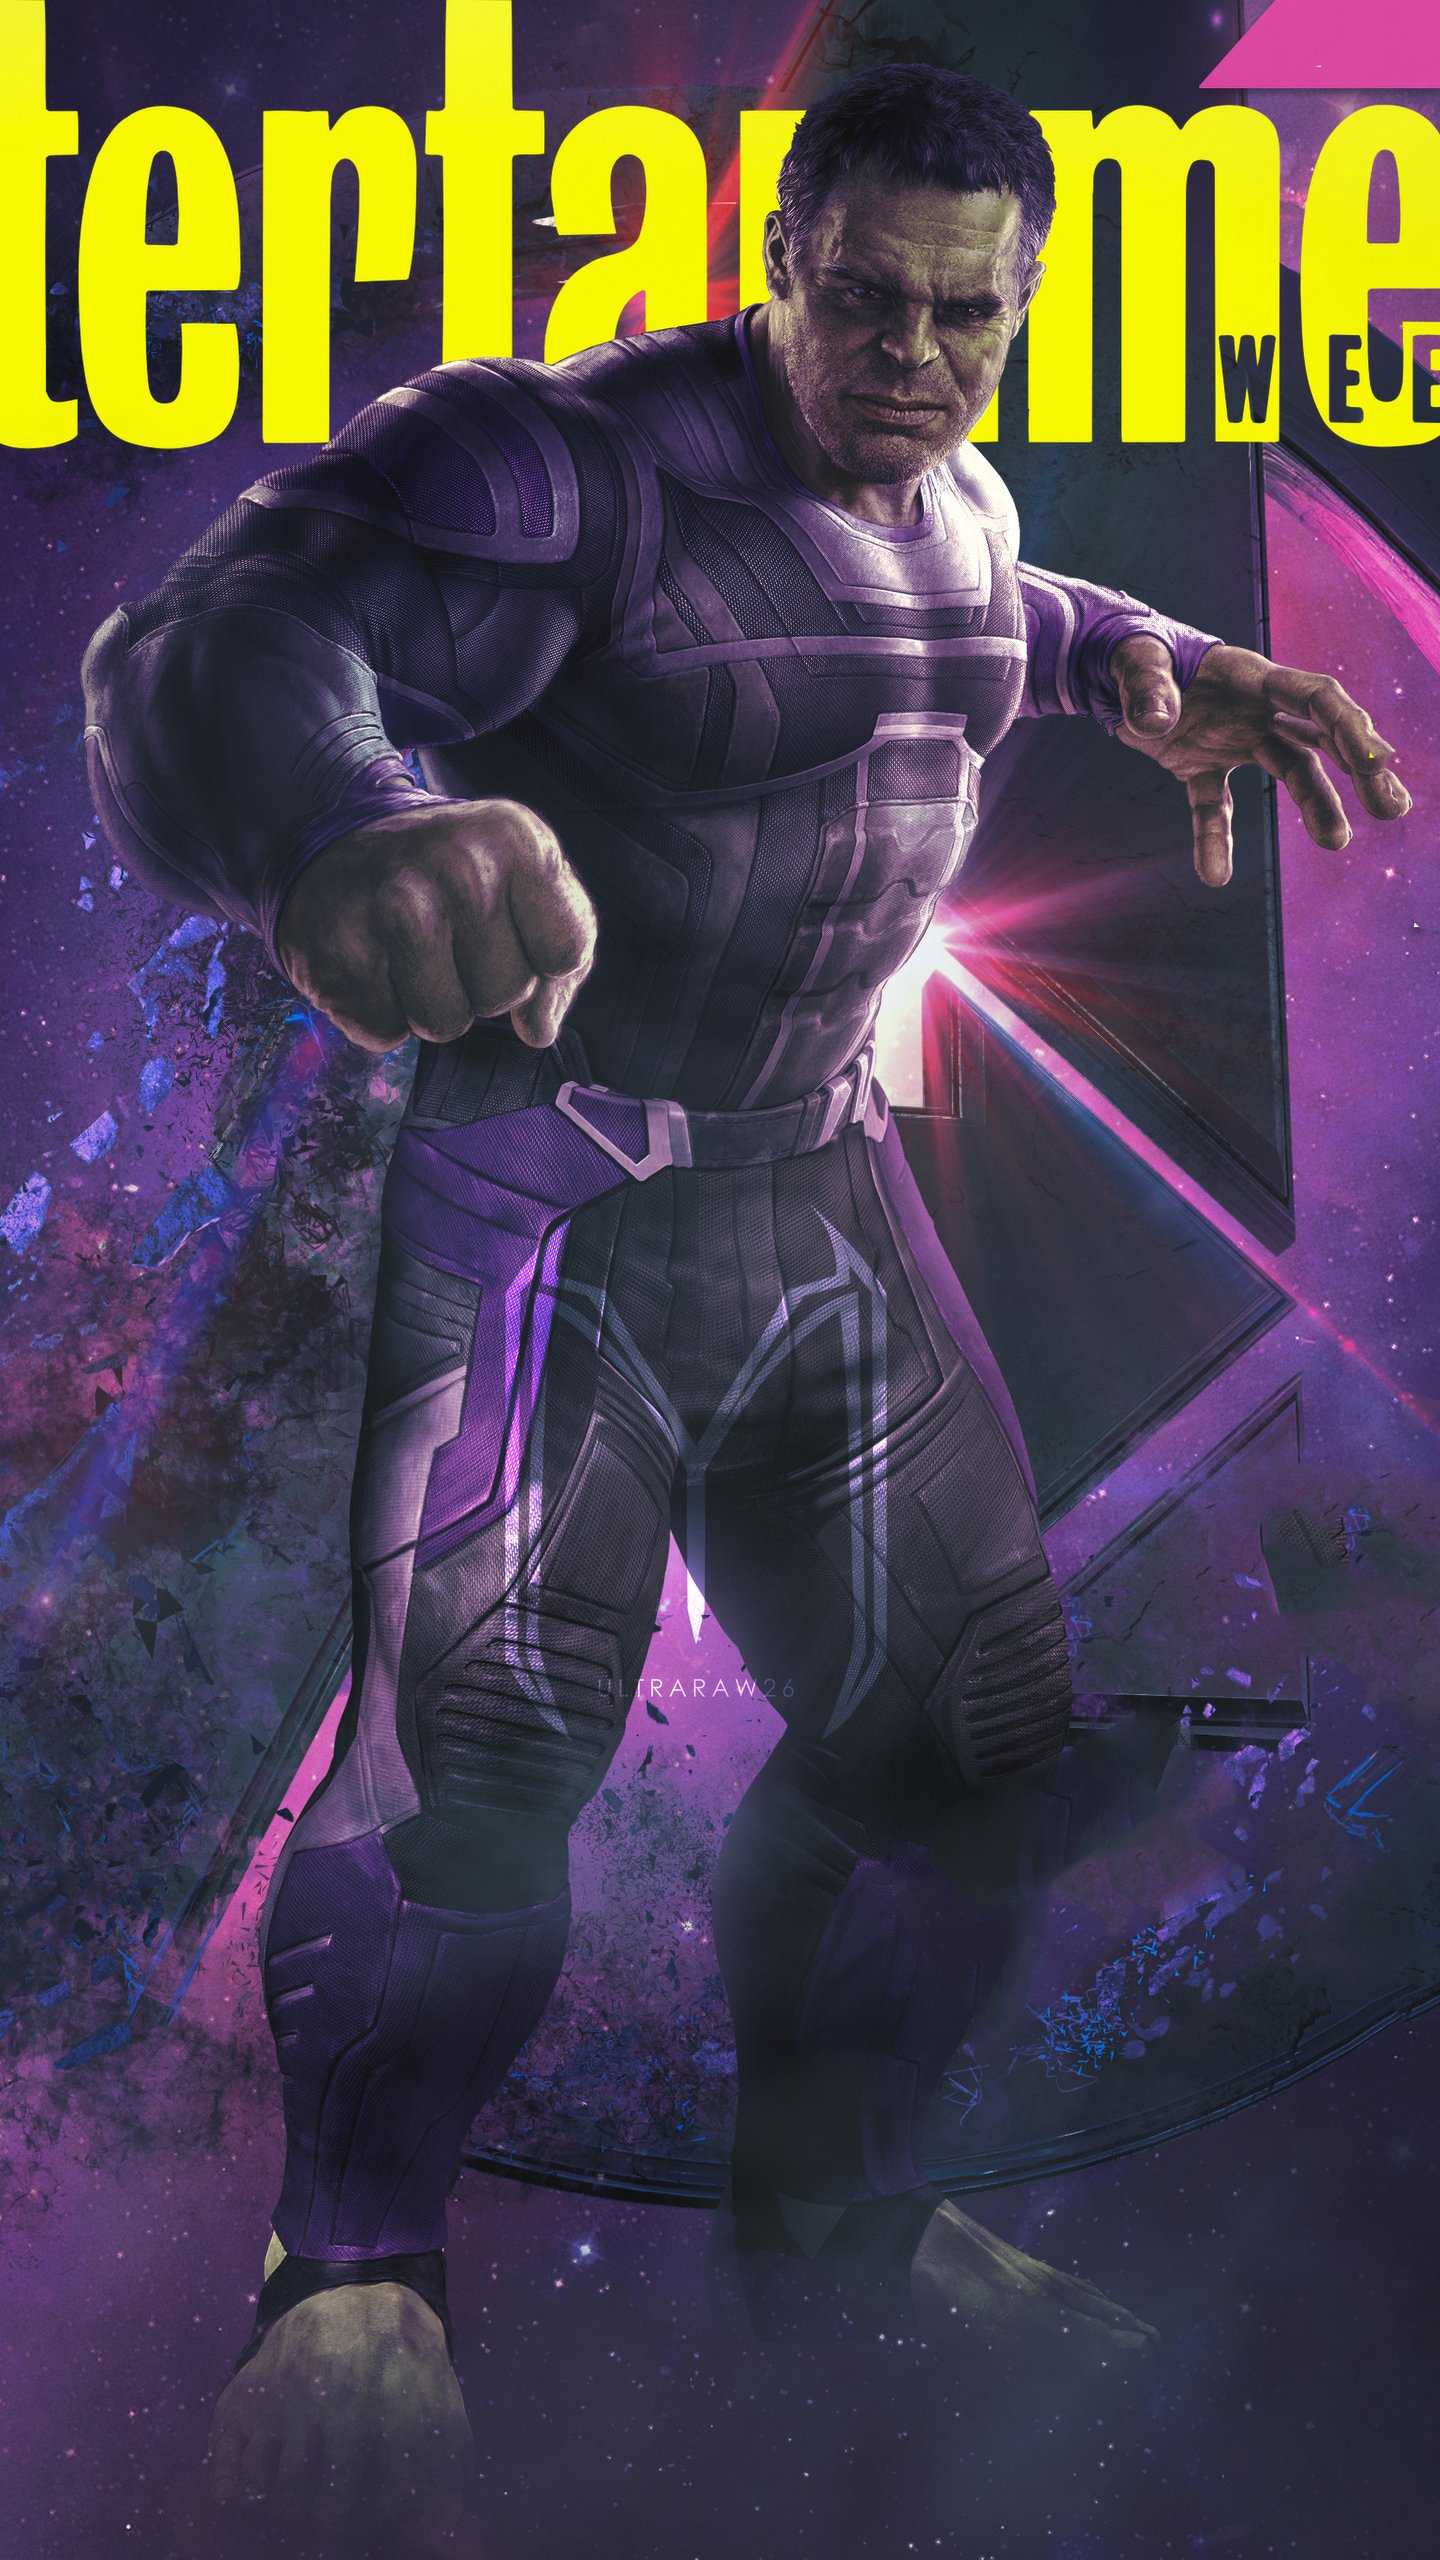 Hulk in Avengers Endgame 2019 Entertainment Weekly HD Wallpaper